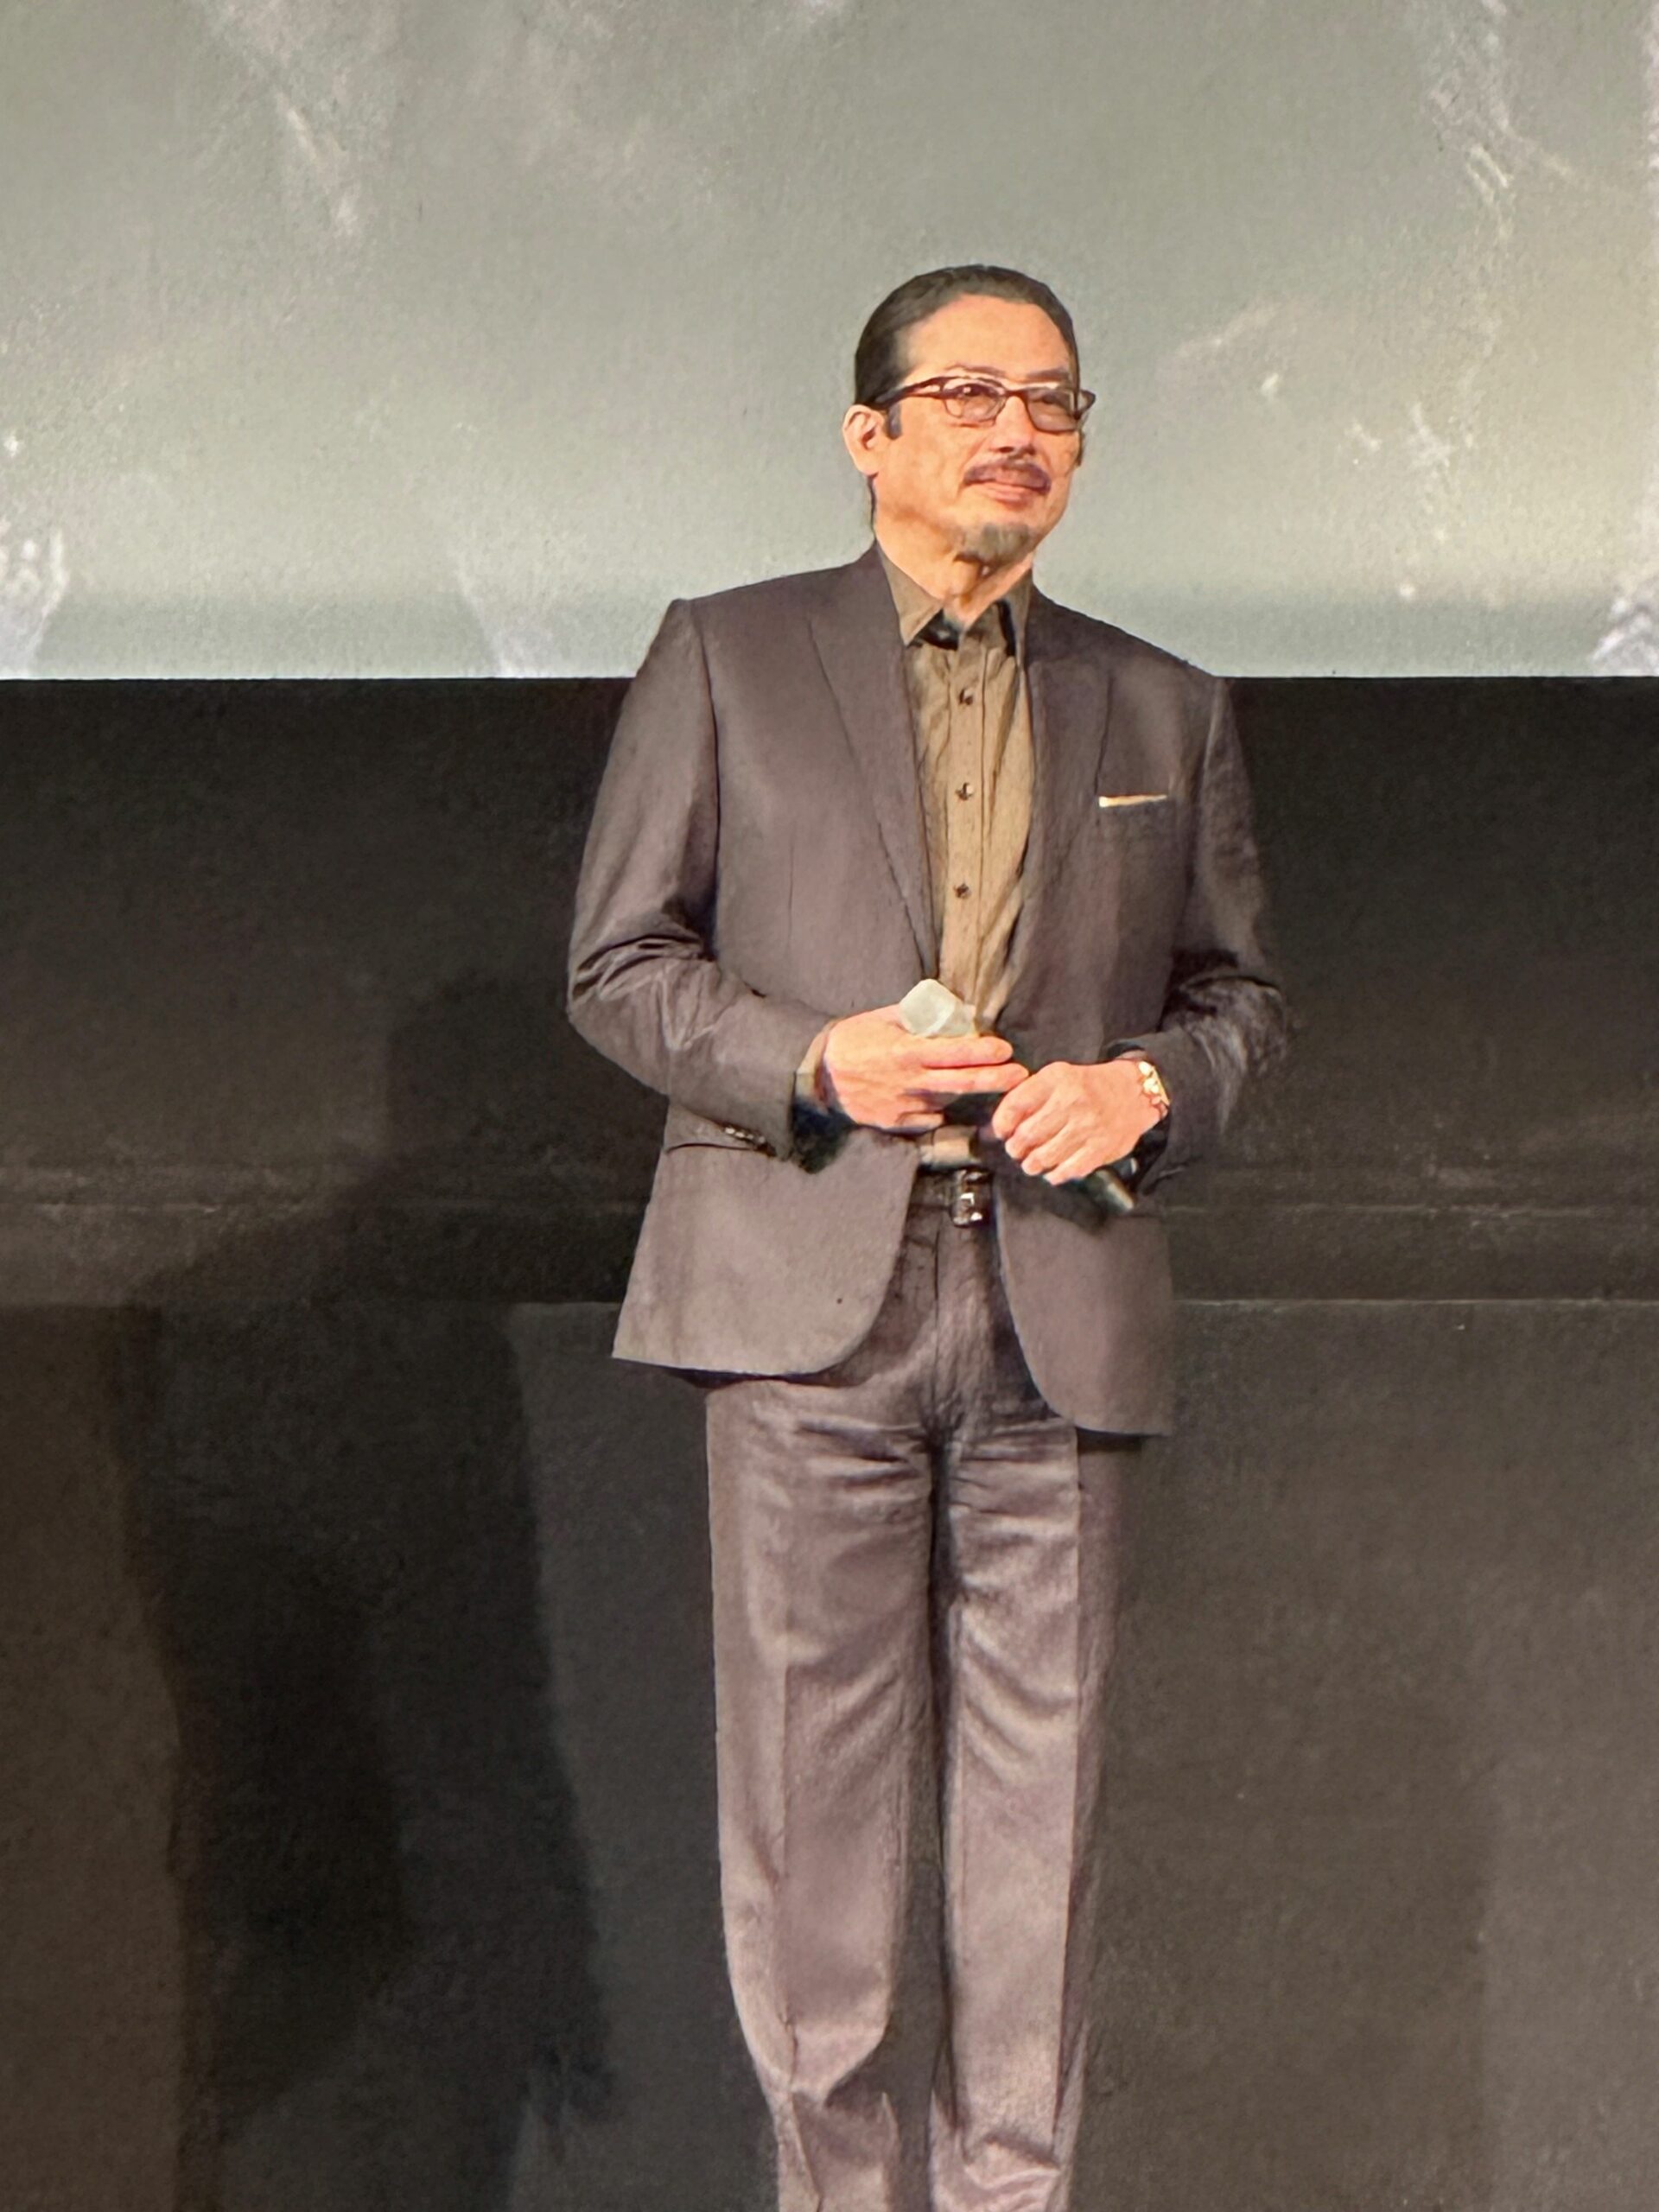 An image of veteran actor Hiroyuki Sanada.